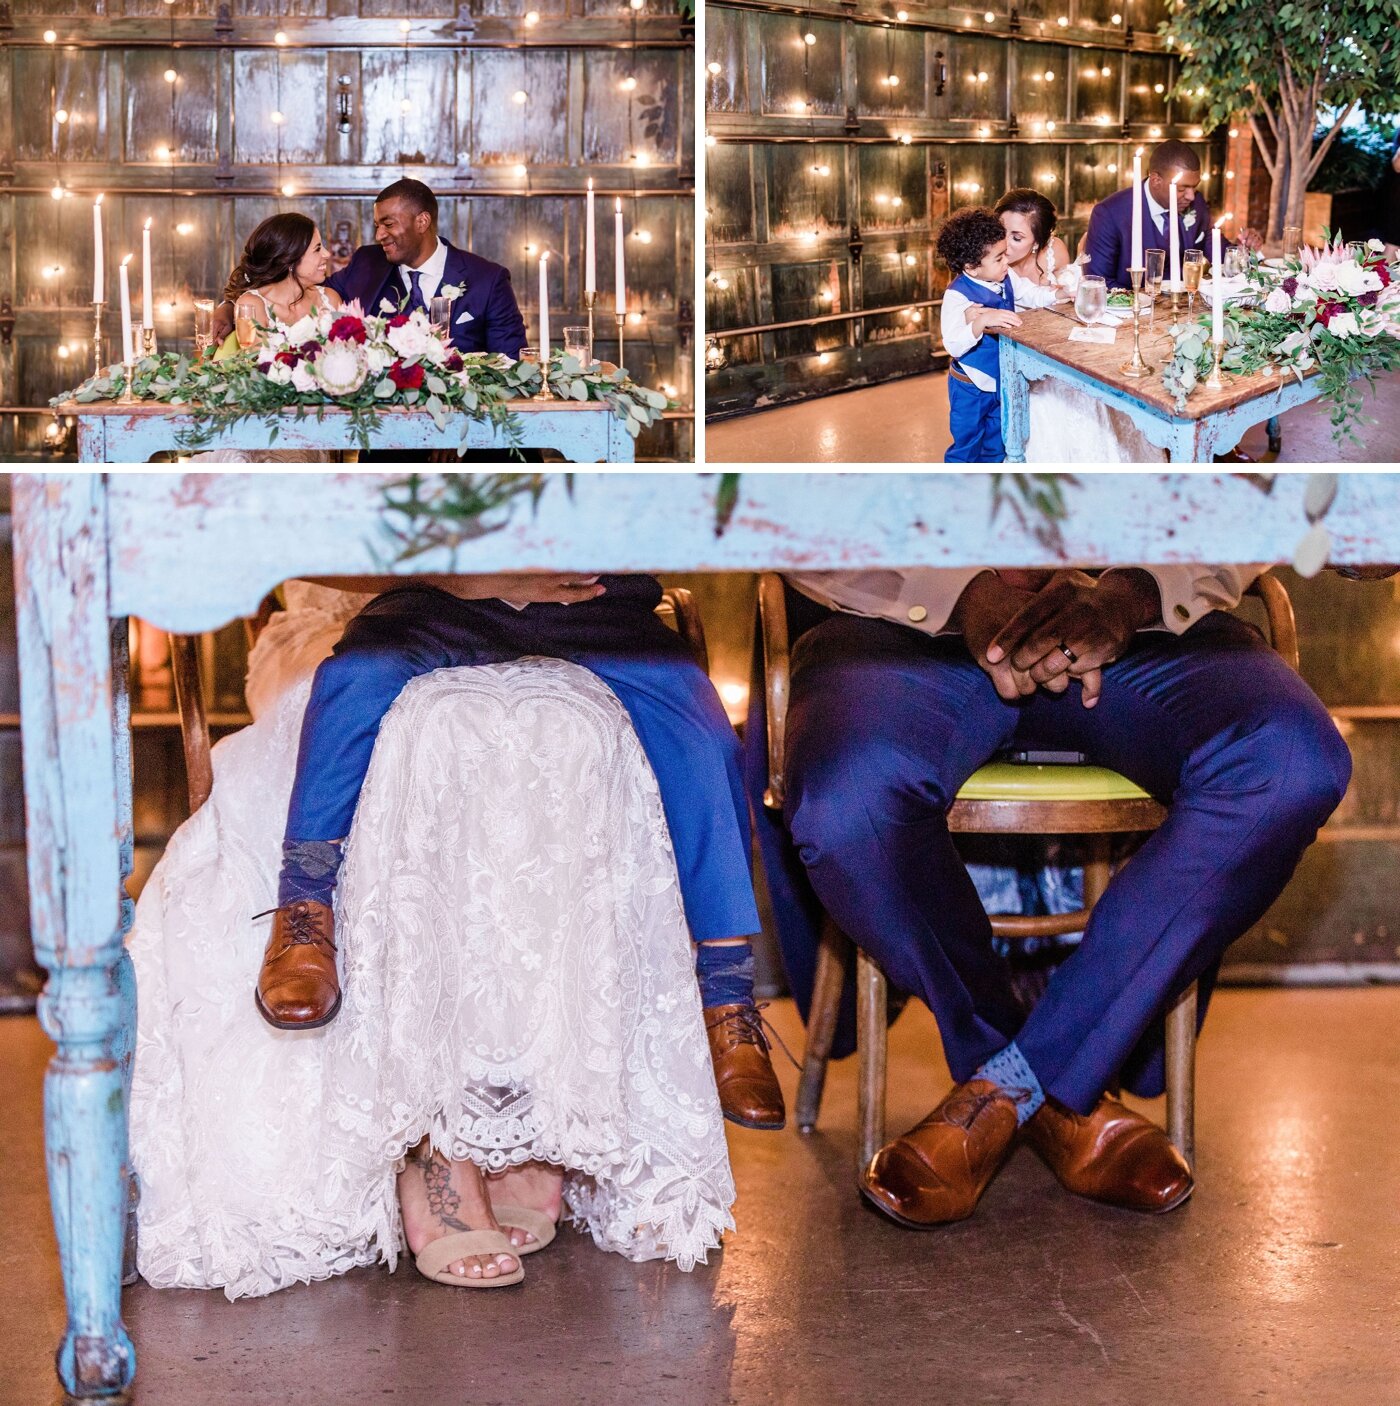 Kristin + Malik’s Wedding Reception at Soho South Cafe in Downtown Savannah